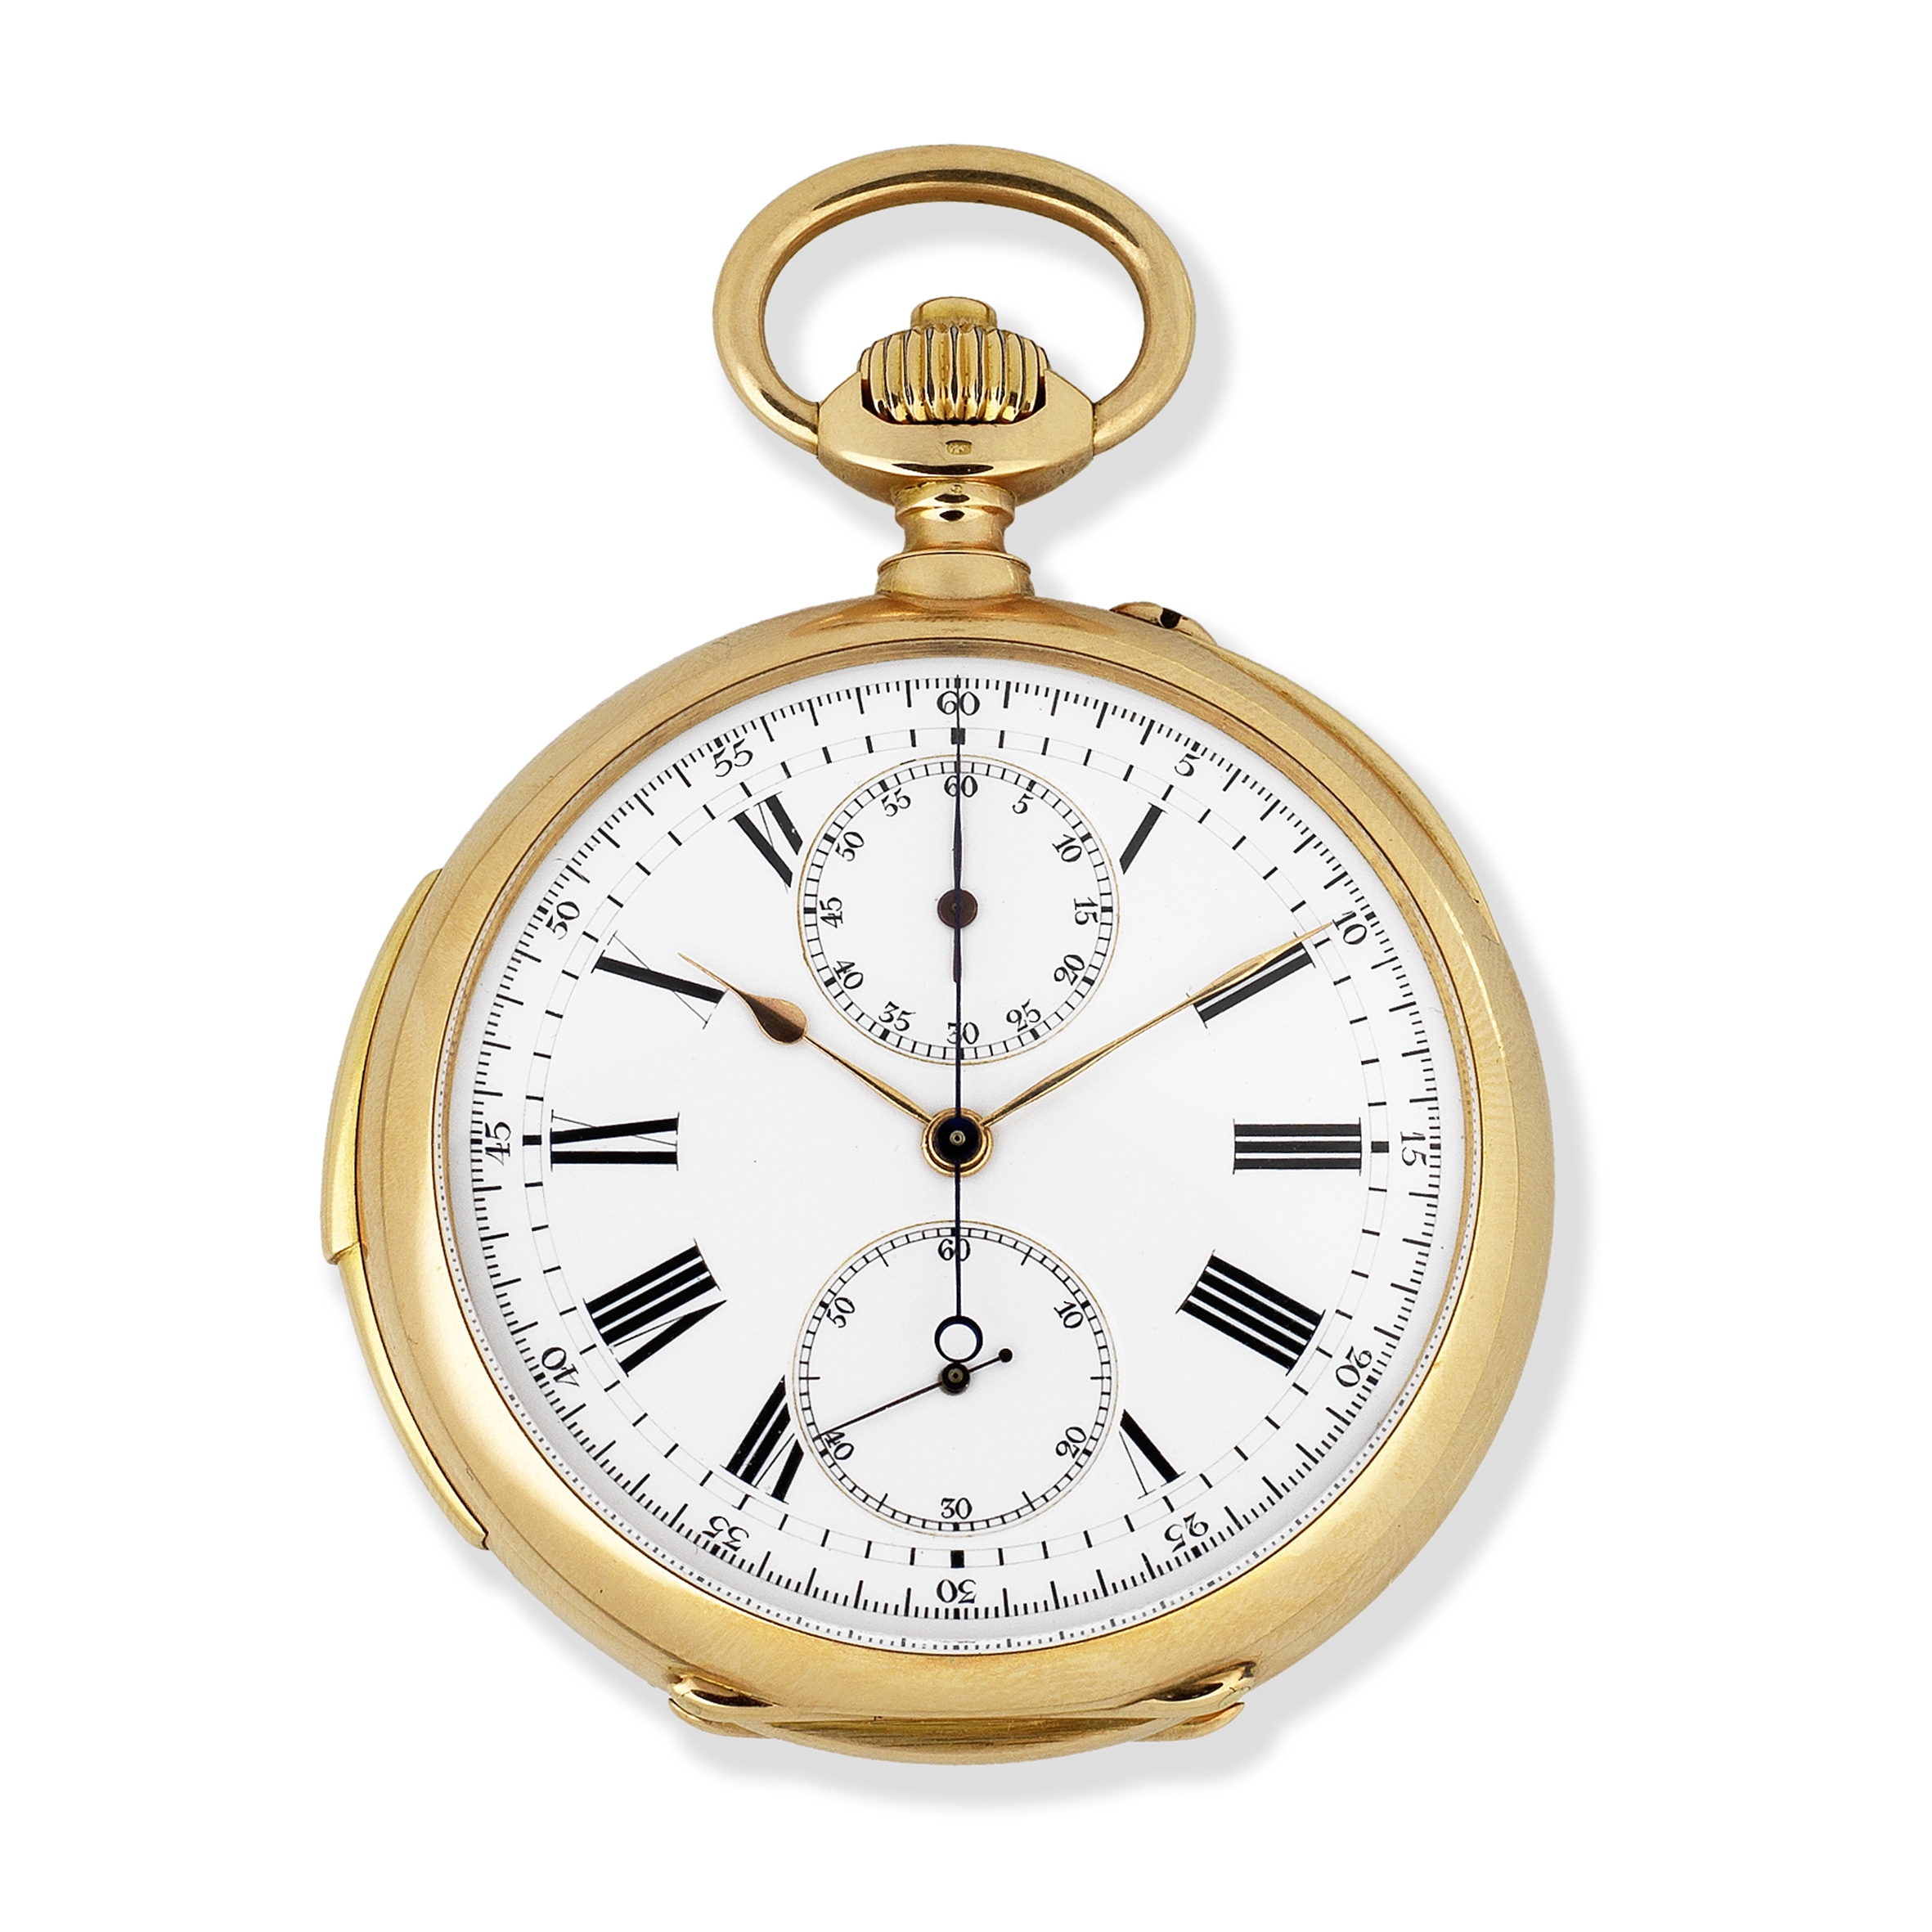 V. Lejeune, 16 Rue de la Banque, Paris. An 18K gold keyless wind minute repeating chronograph ope...